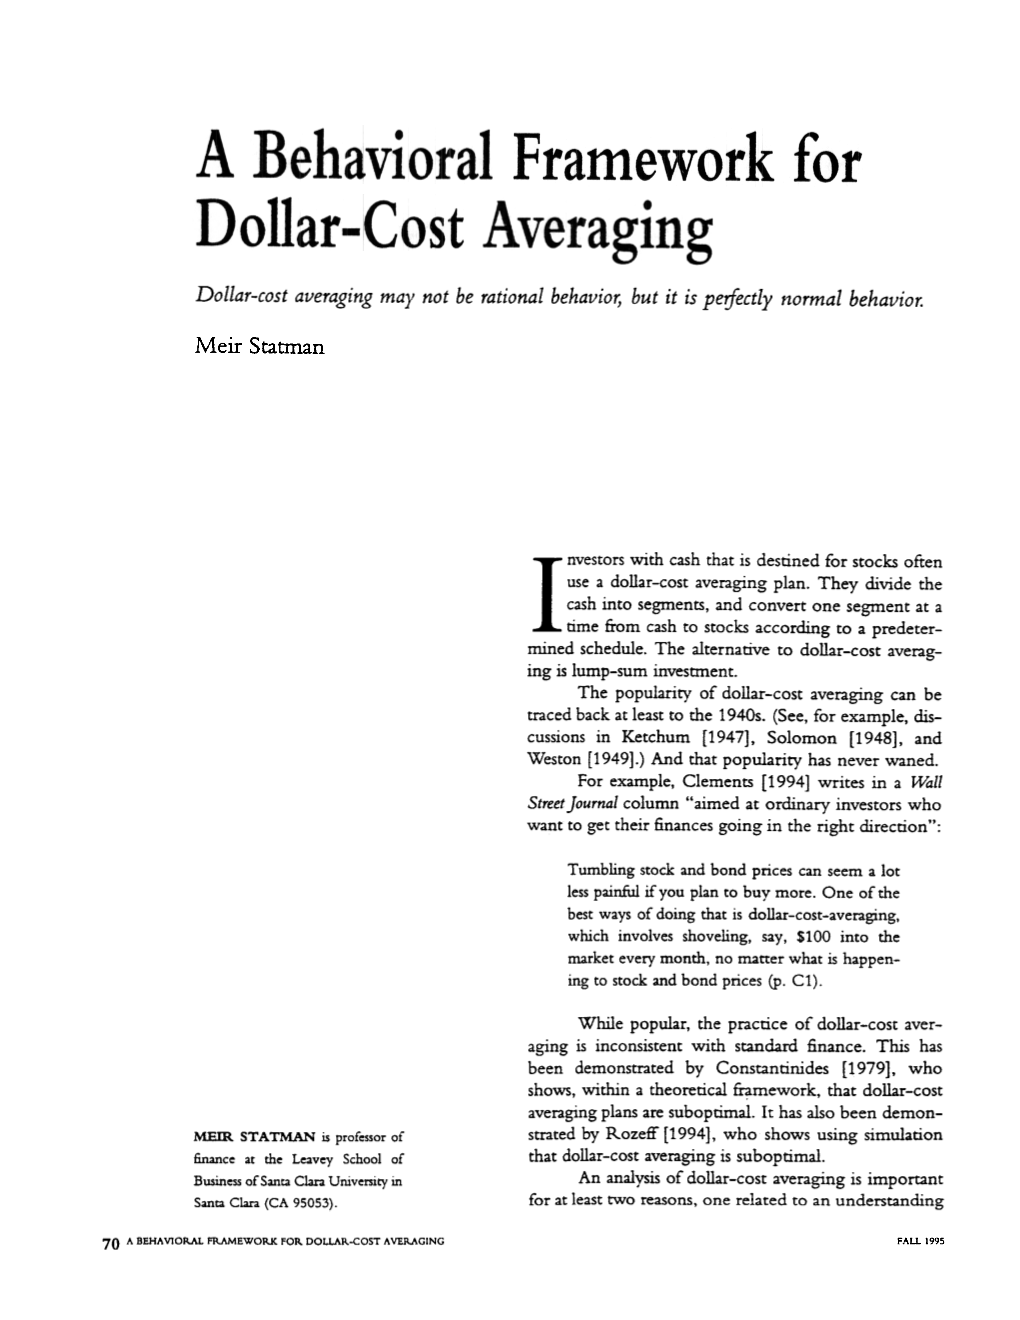 A Behavioral Framework for Dollar Cost Averaging